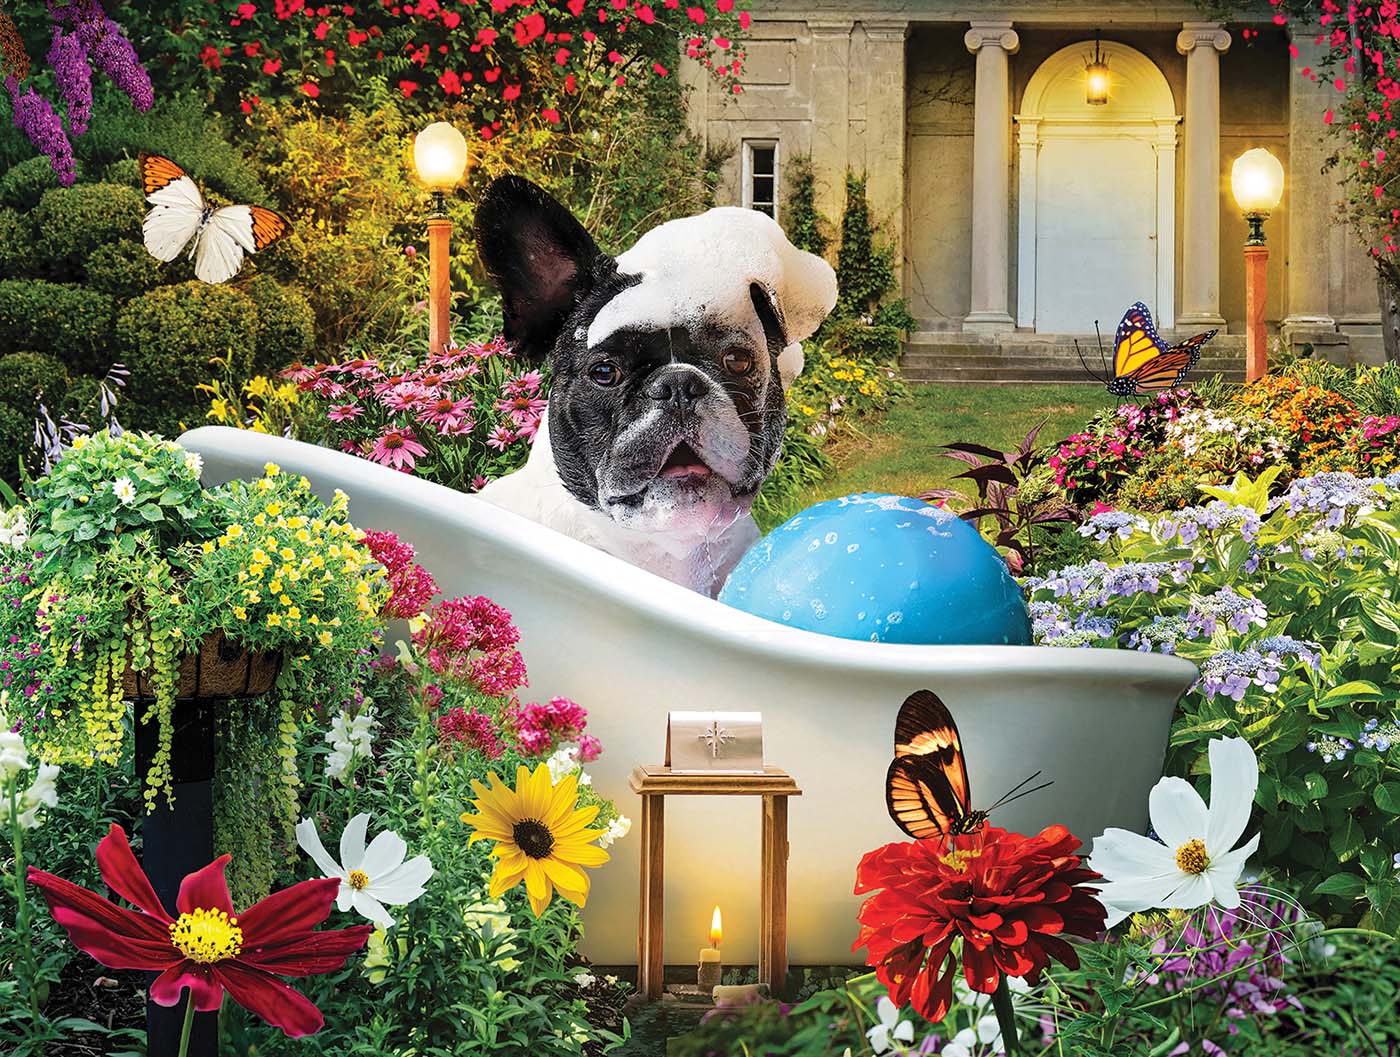 Bubble Bath in the Garden